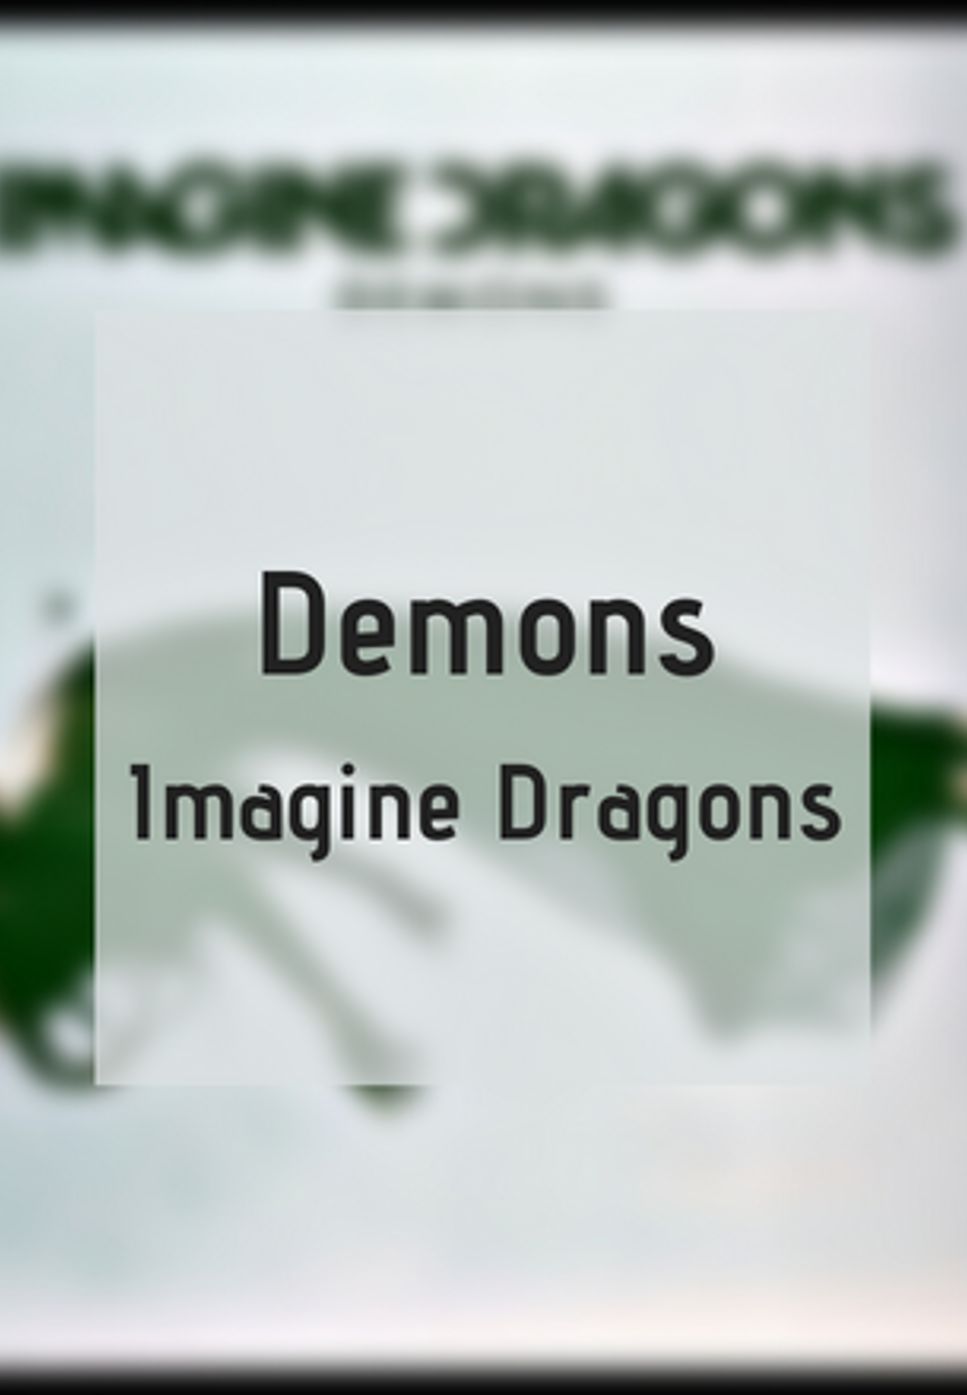 Imagine Dragons - Demons by GuestinPiano